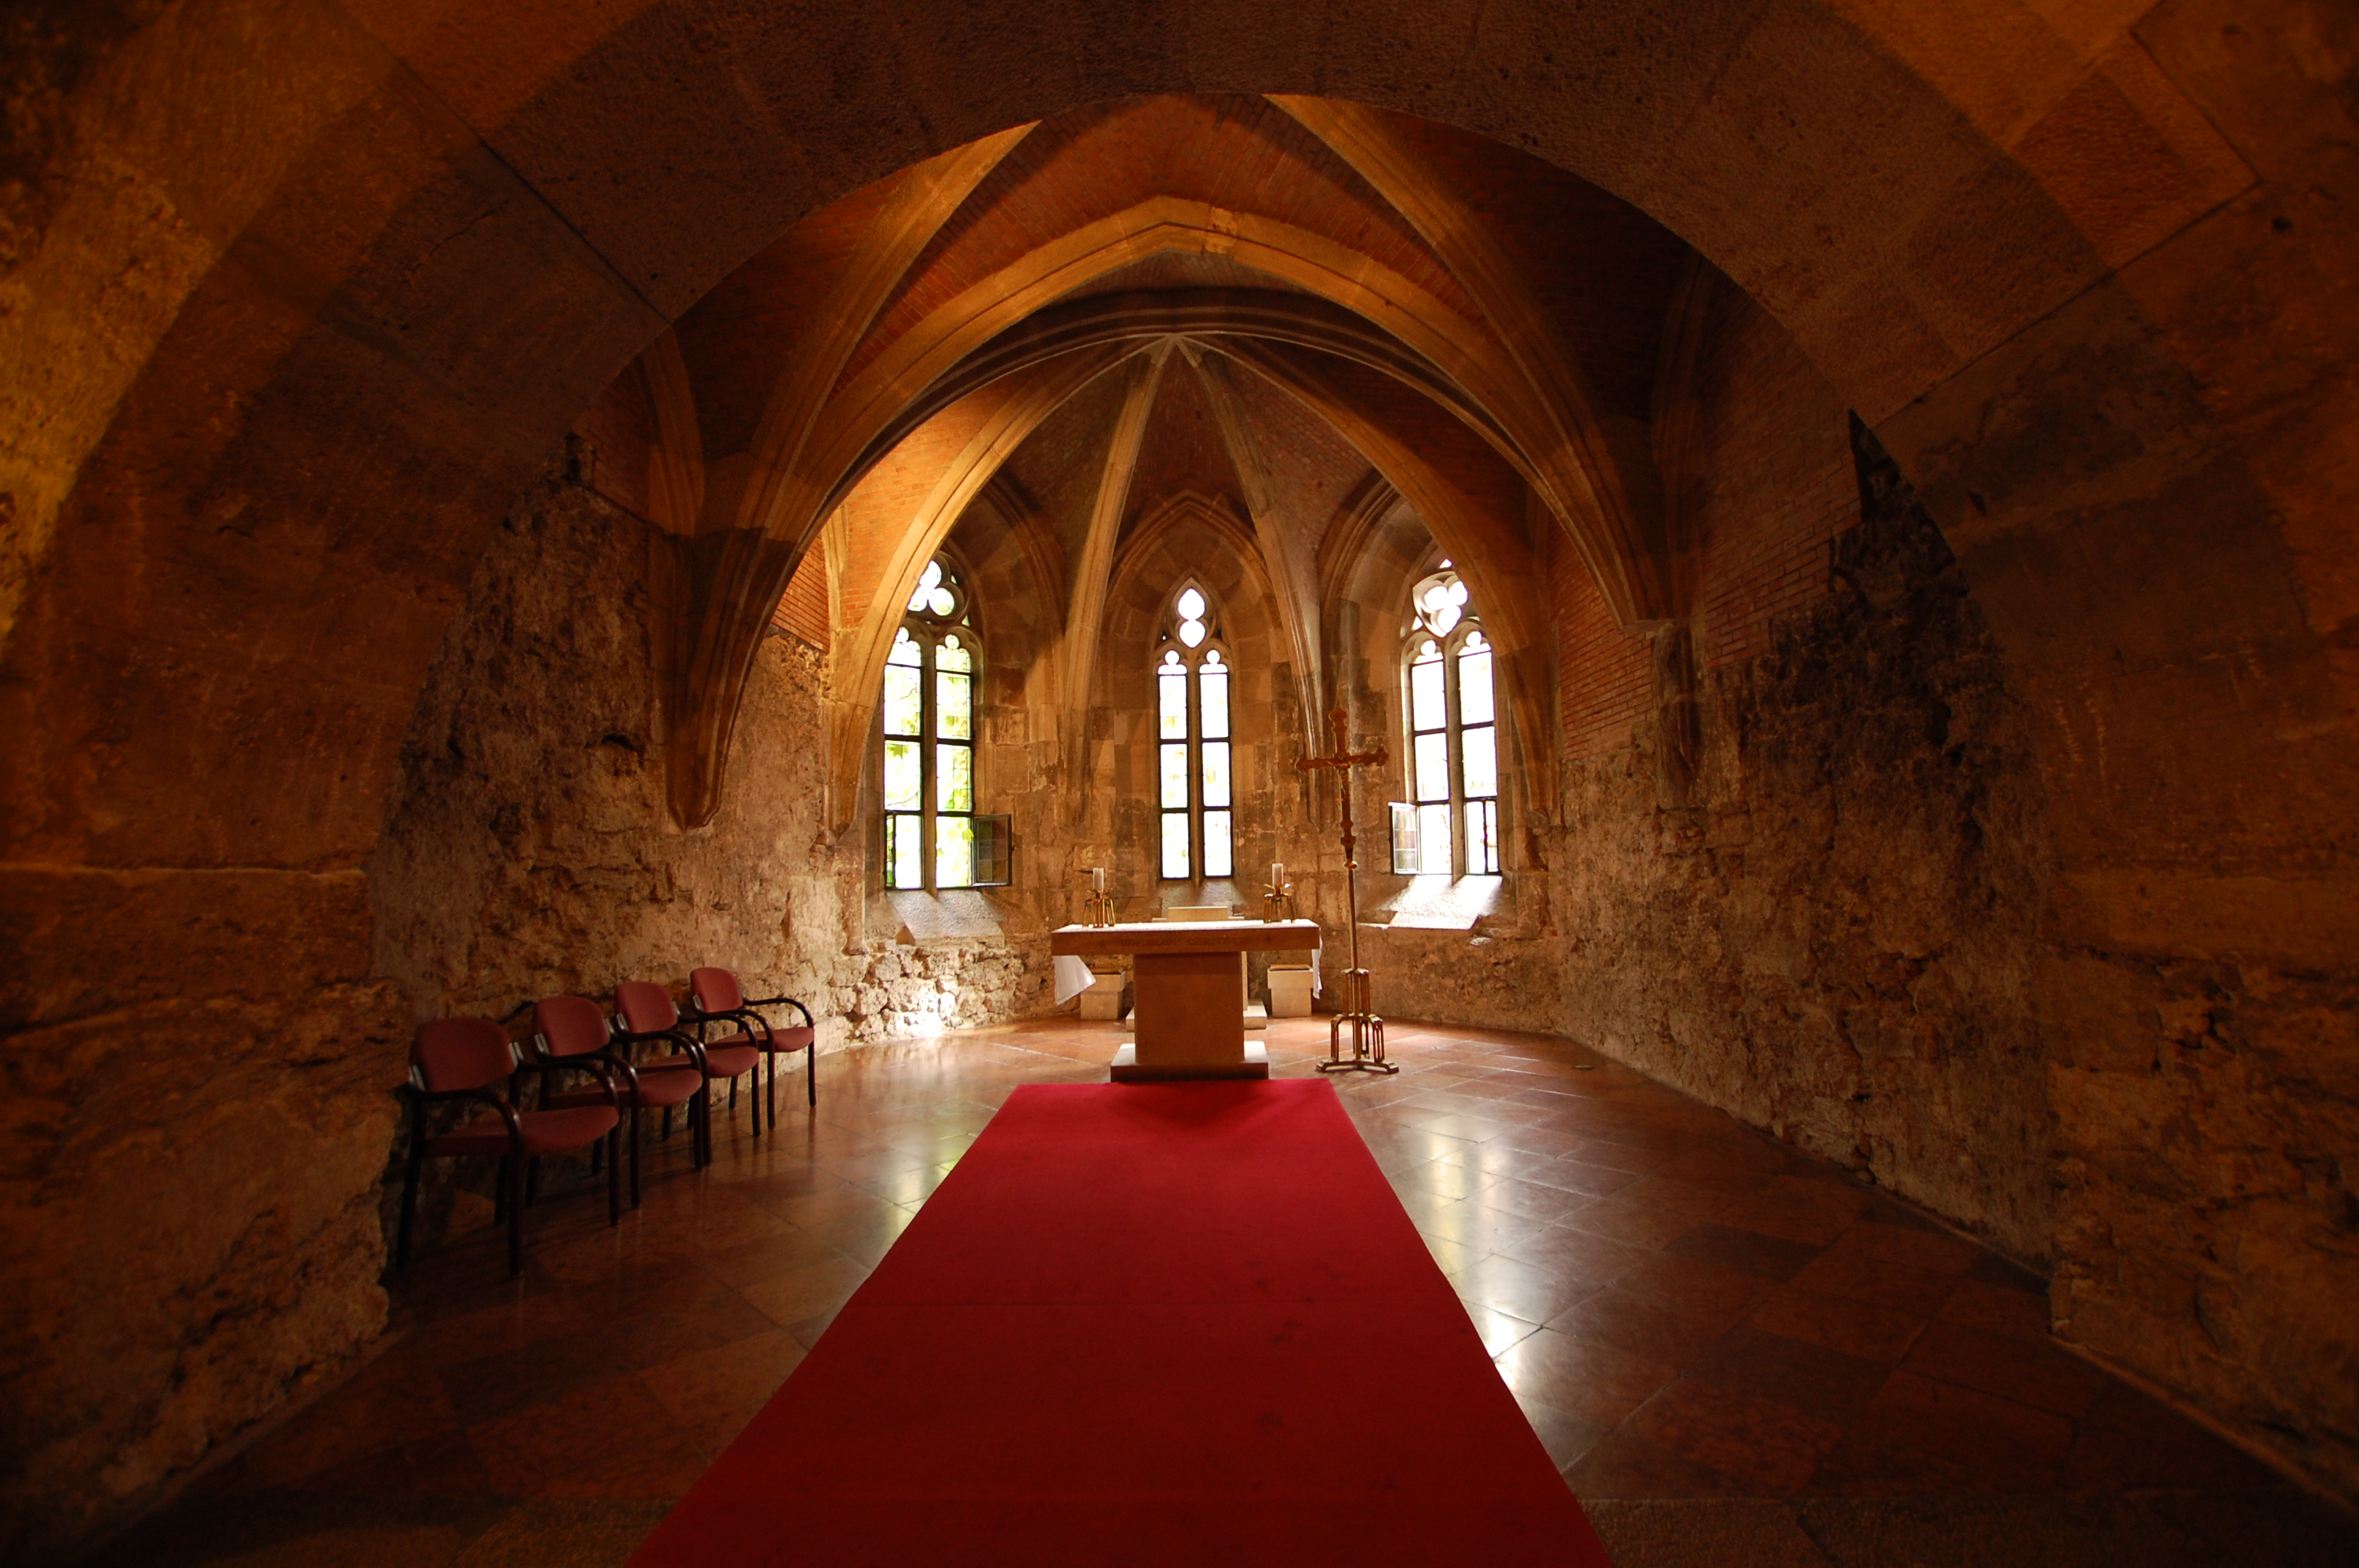 Buda_castle_interior_church.JPG